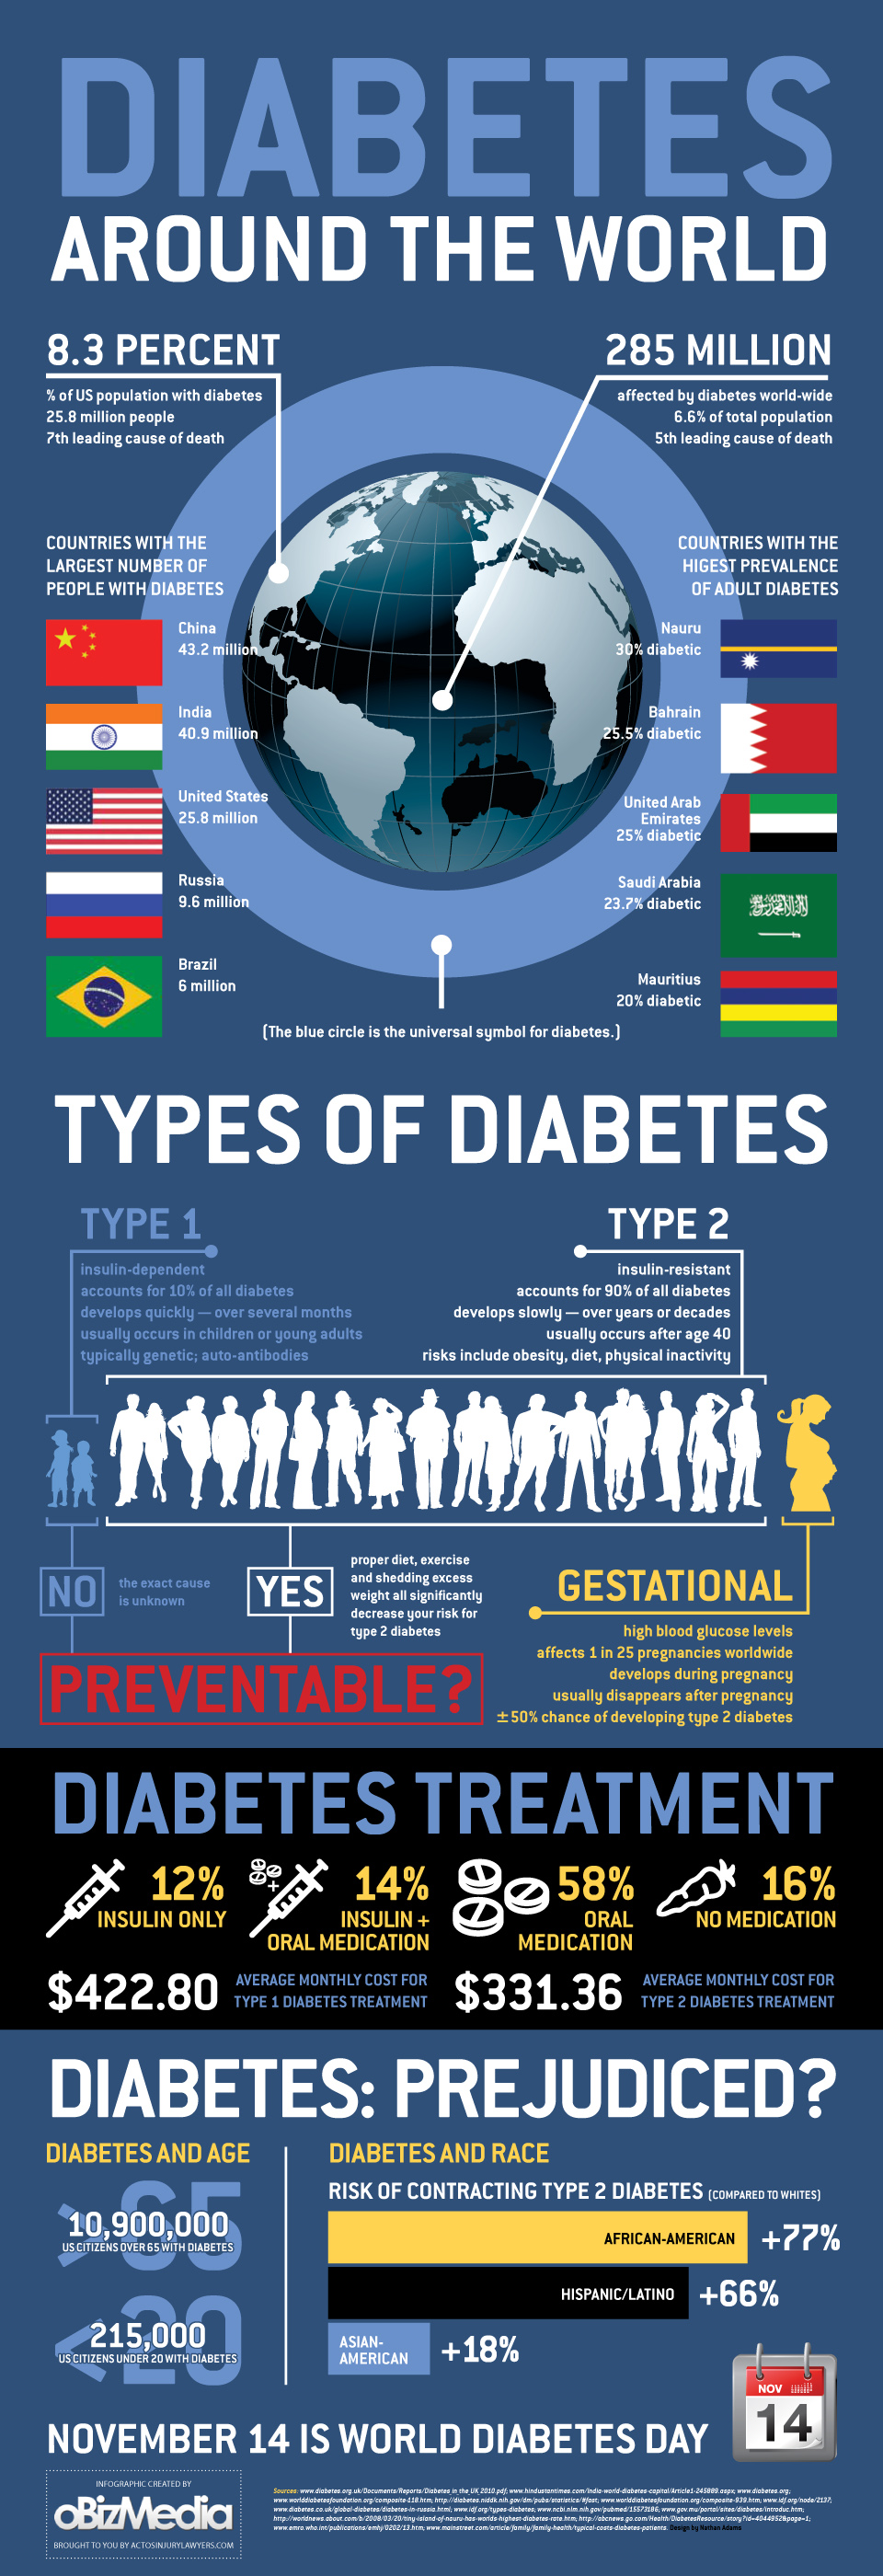 Worldwide Diabetes Statistics Dr. Sam Robbins